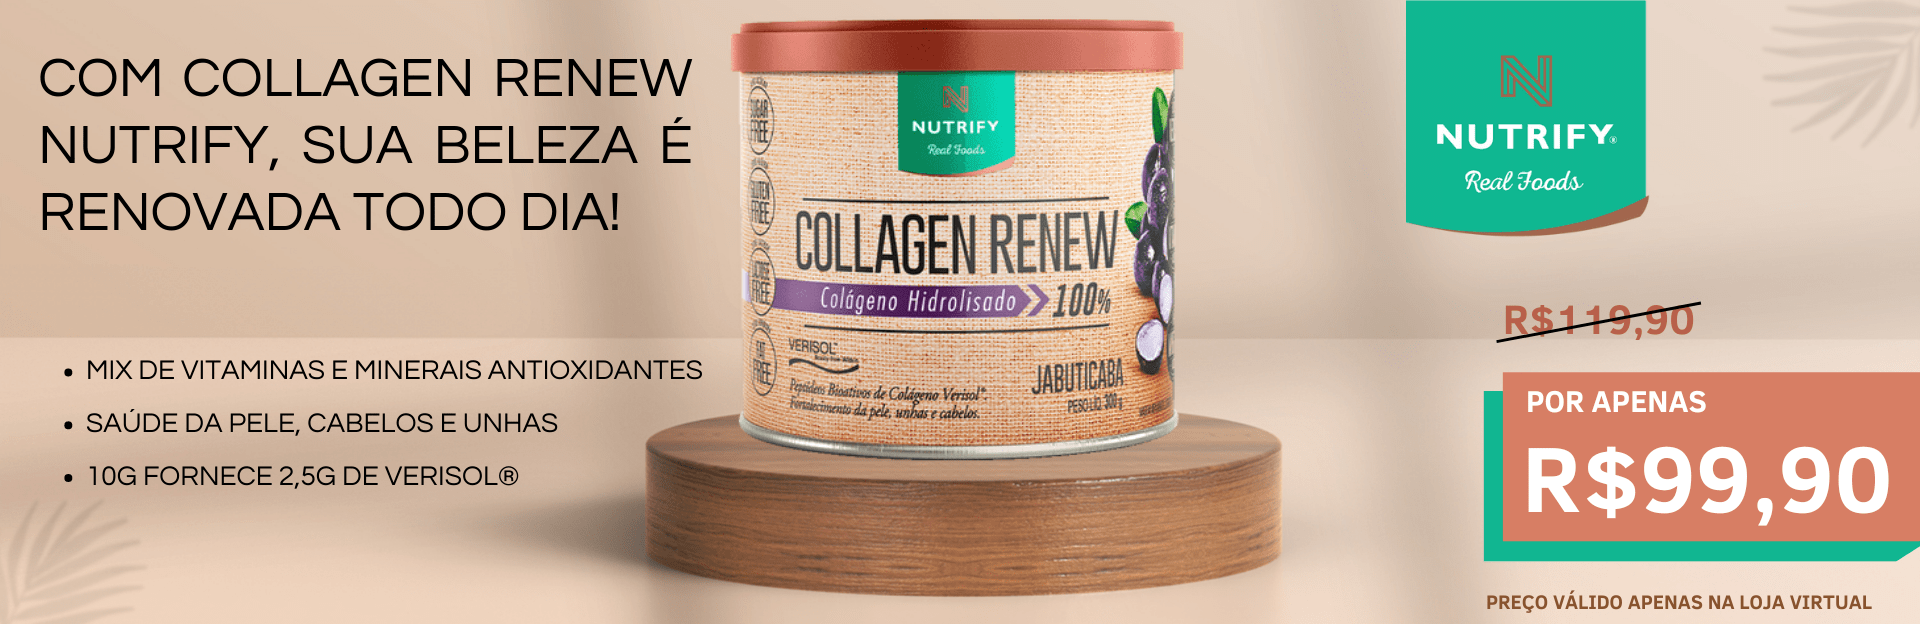 Collagen Renew